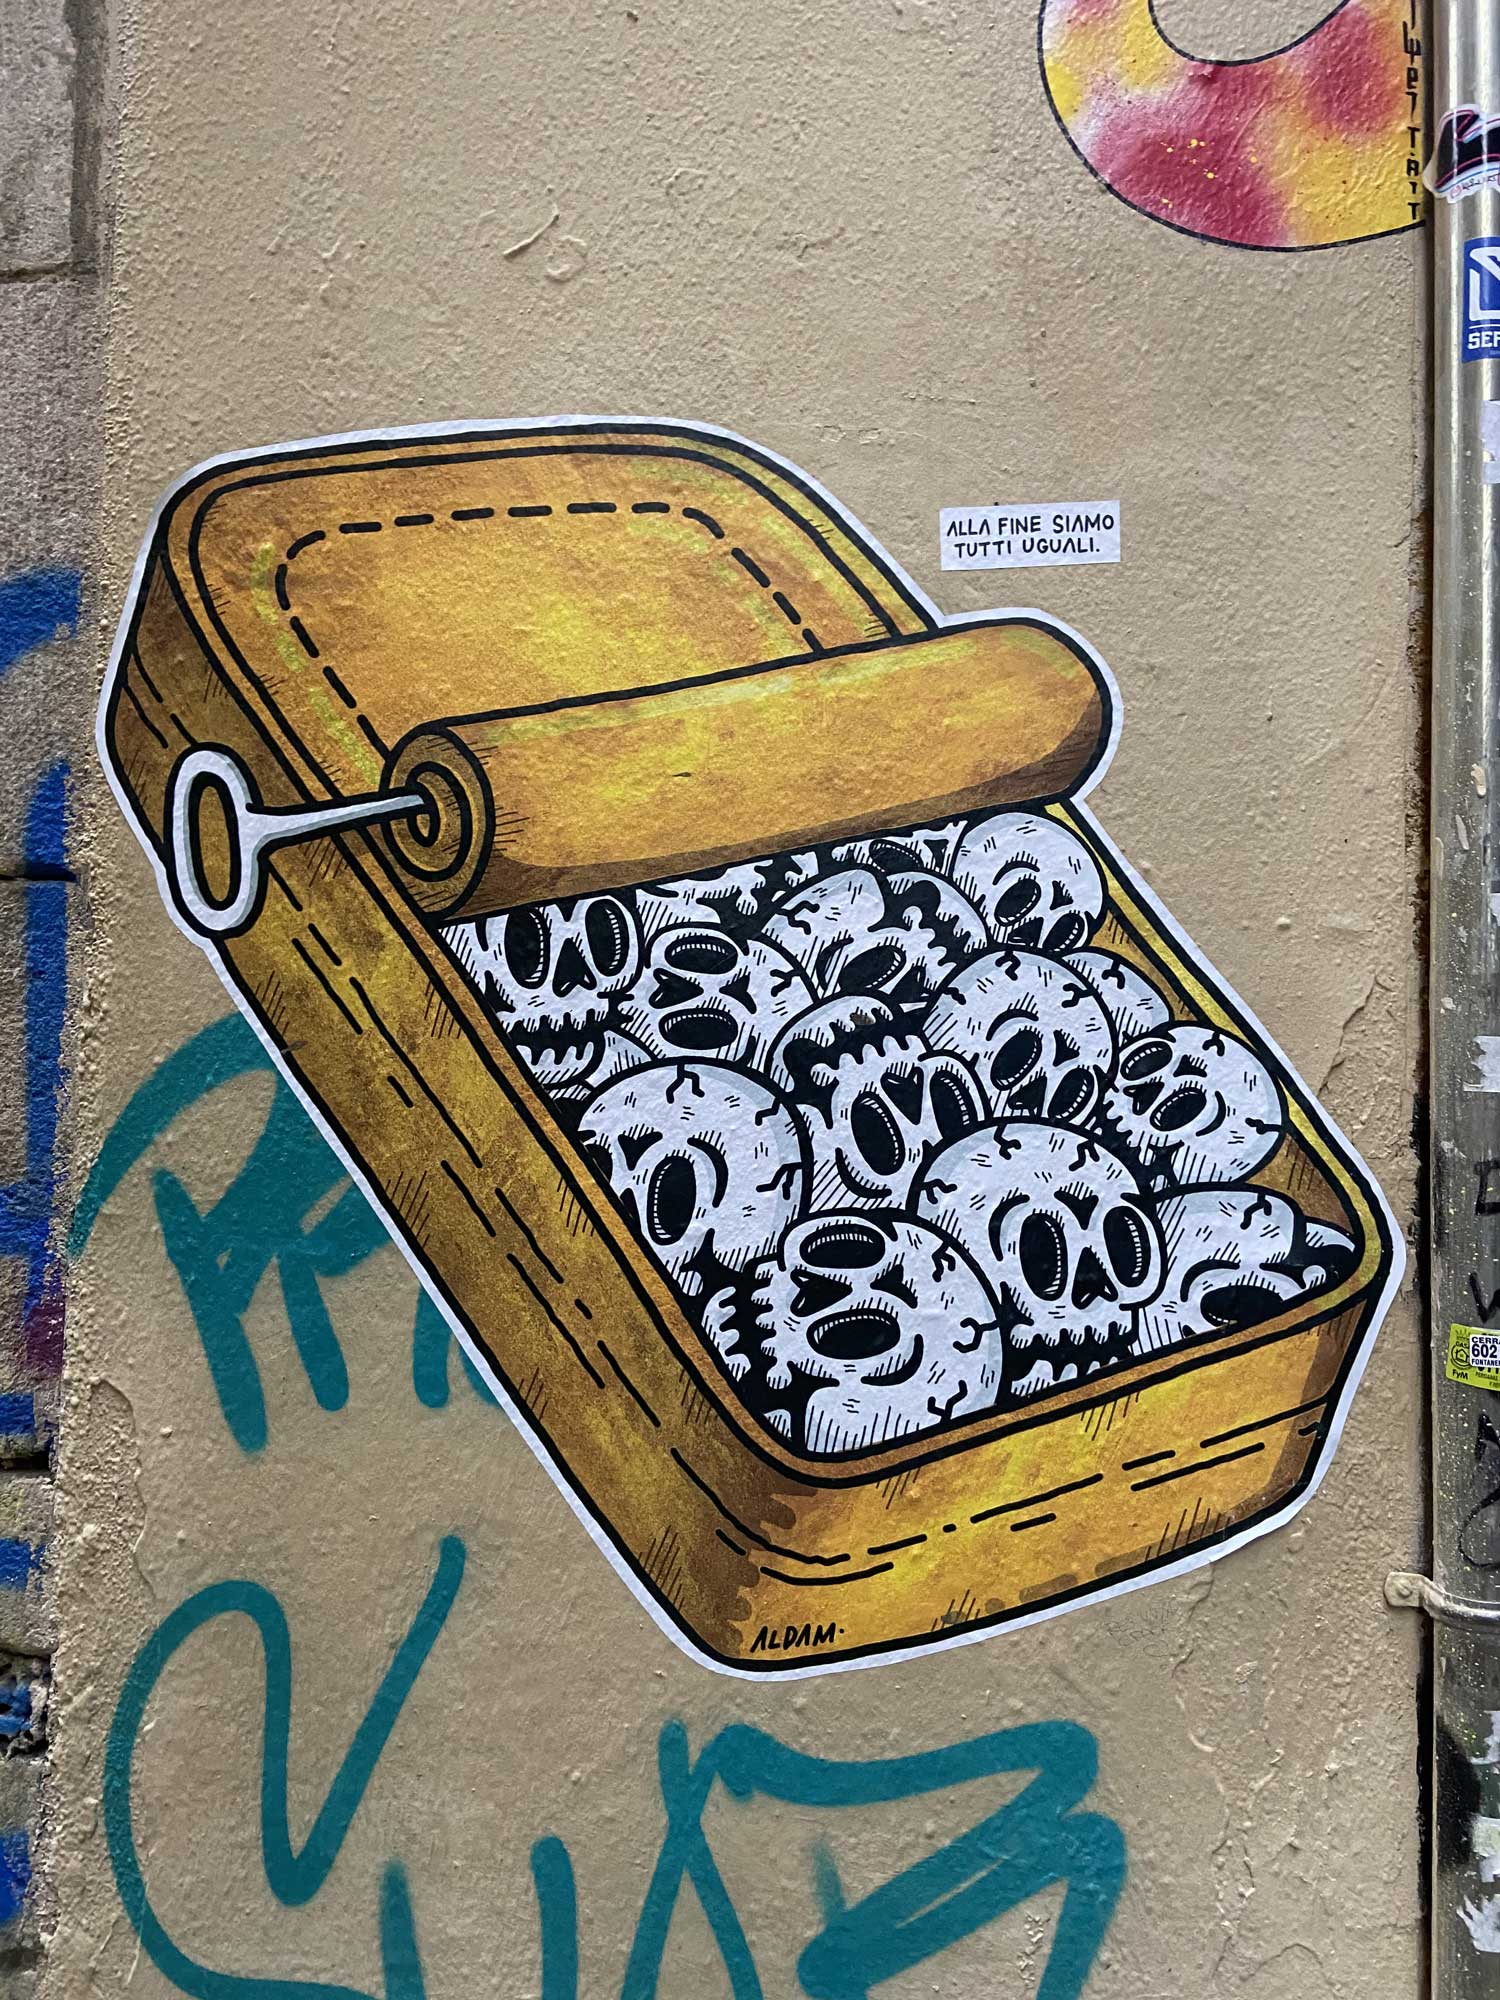 streetart gallery Aldam Barcelona